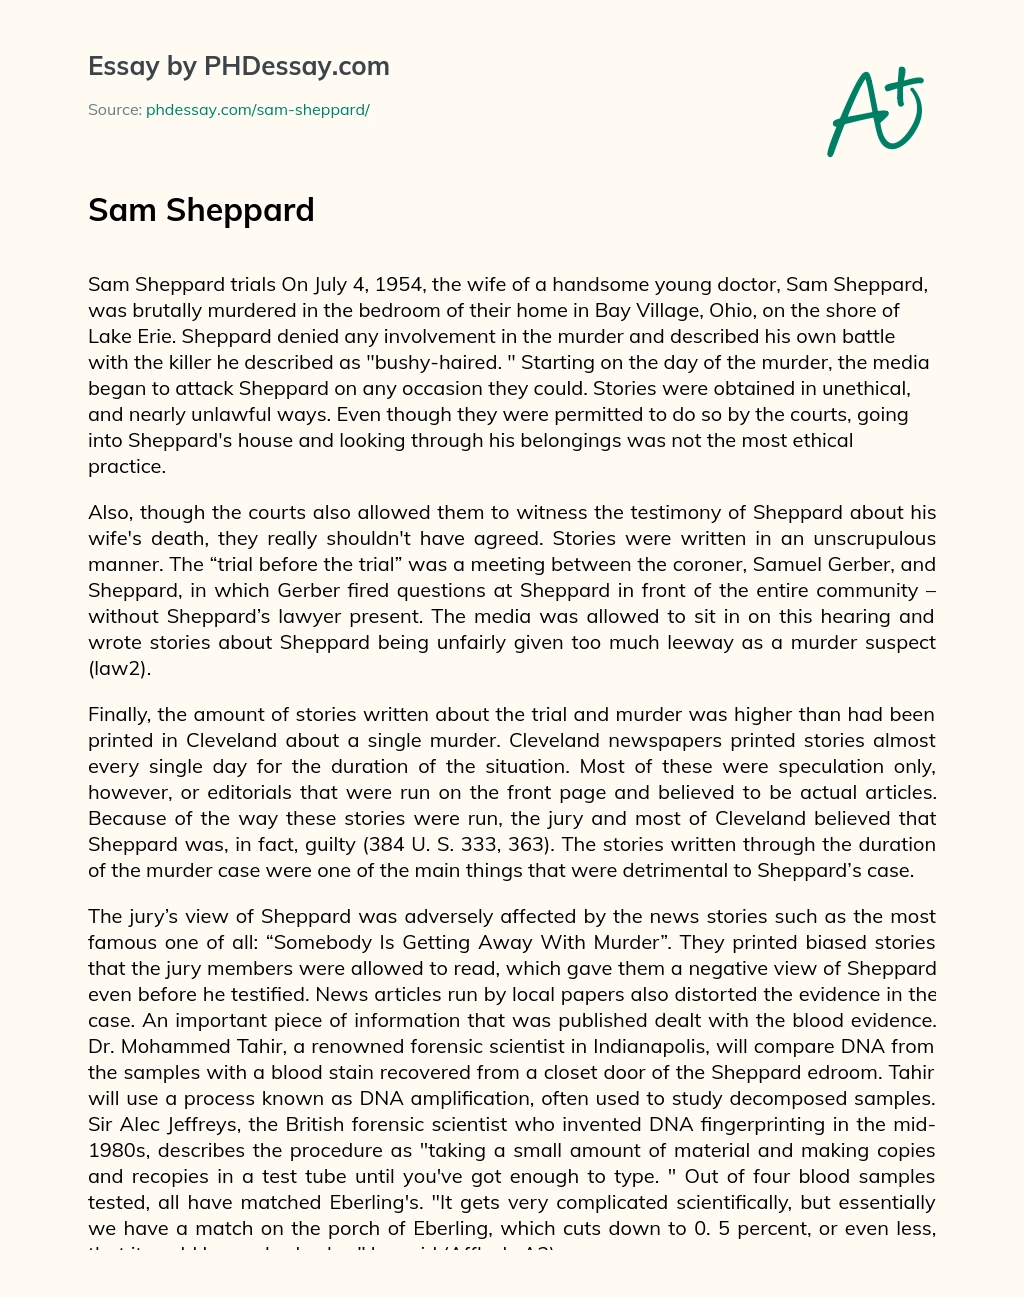 Sam Sheppard essay